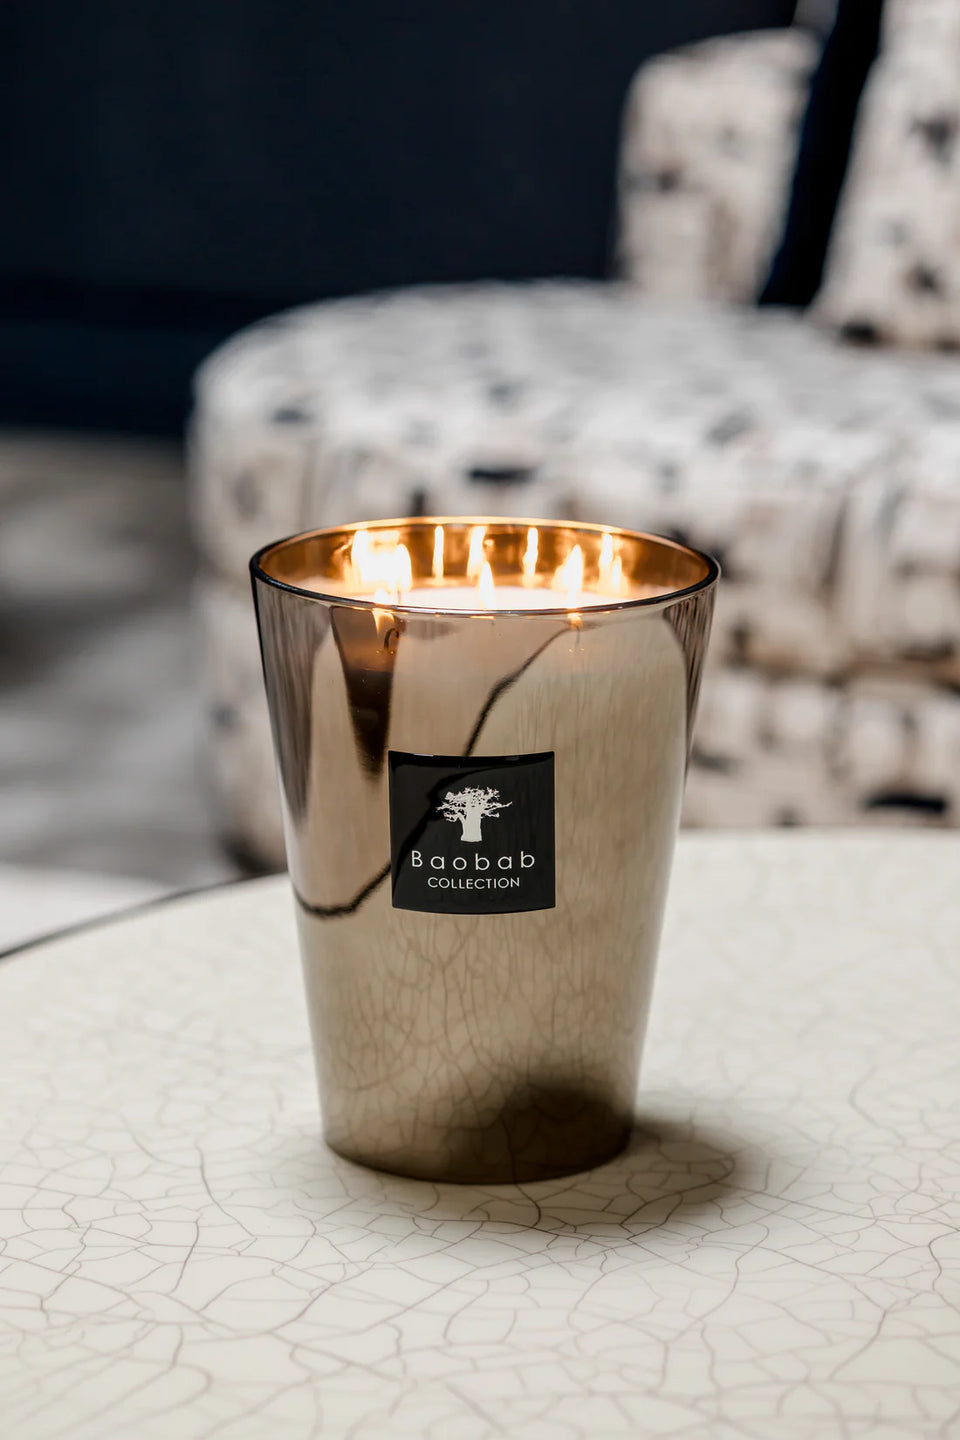 Baobab Collection "Platinum" žvakė